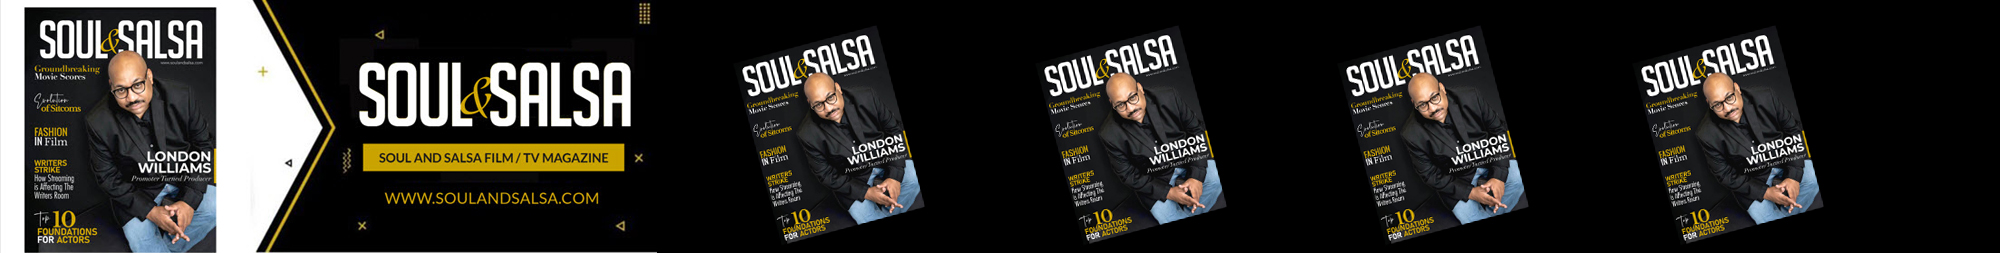 Soul and Salsa Film TV Magazine